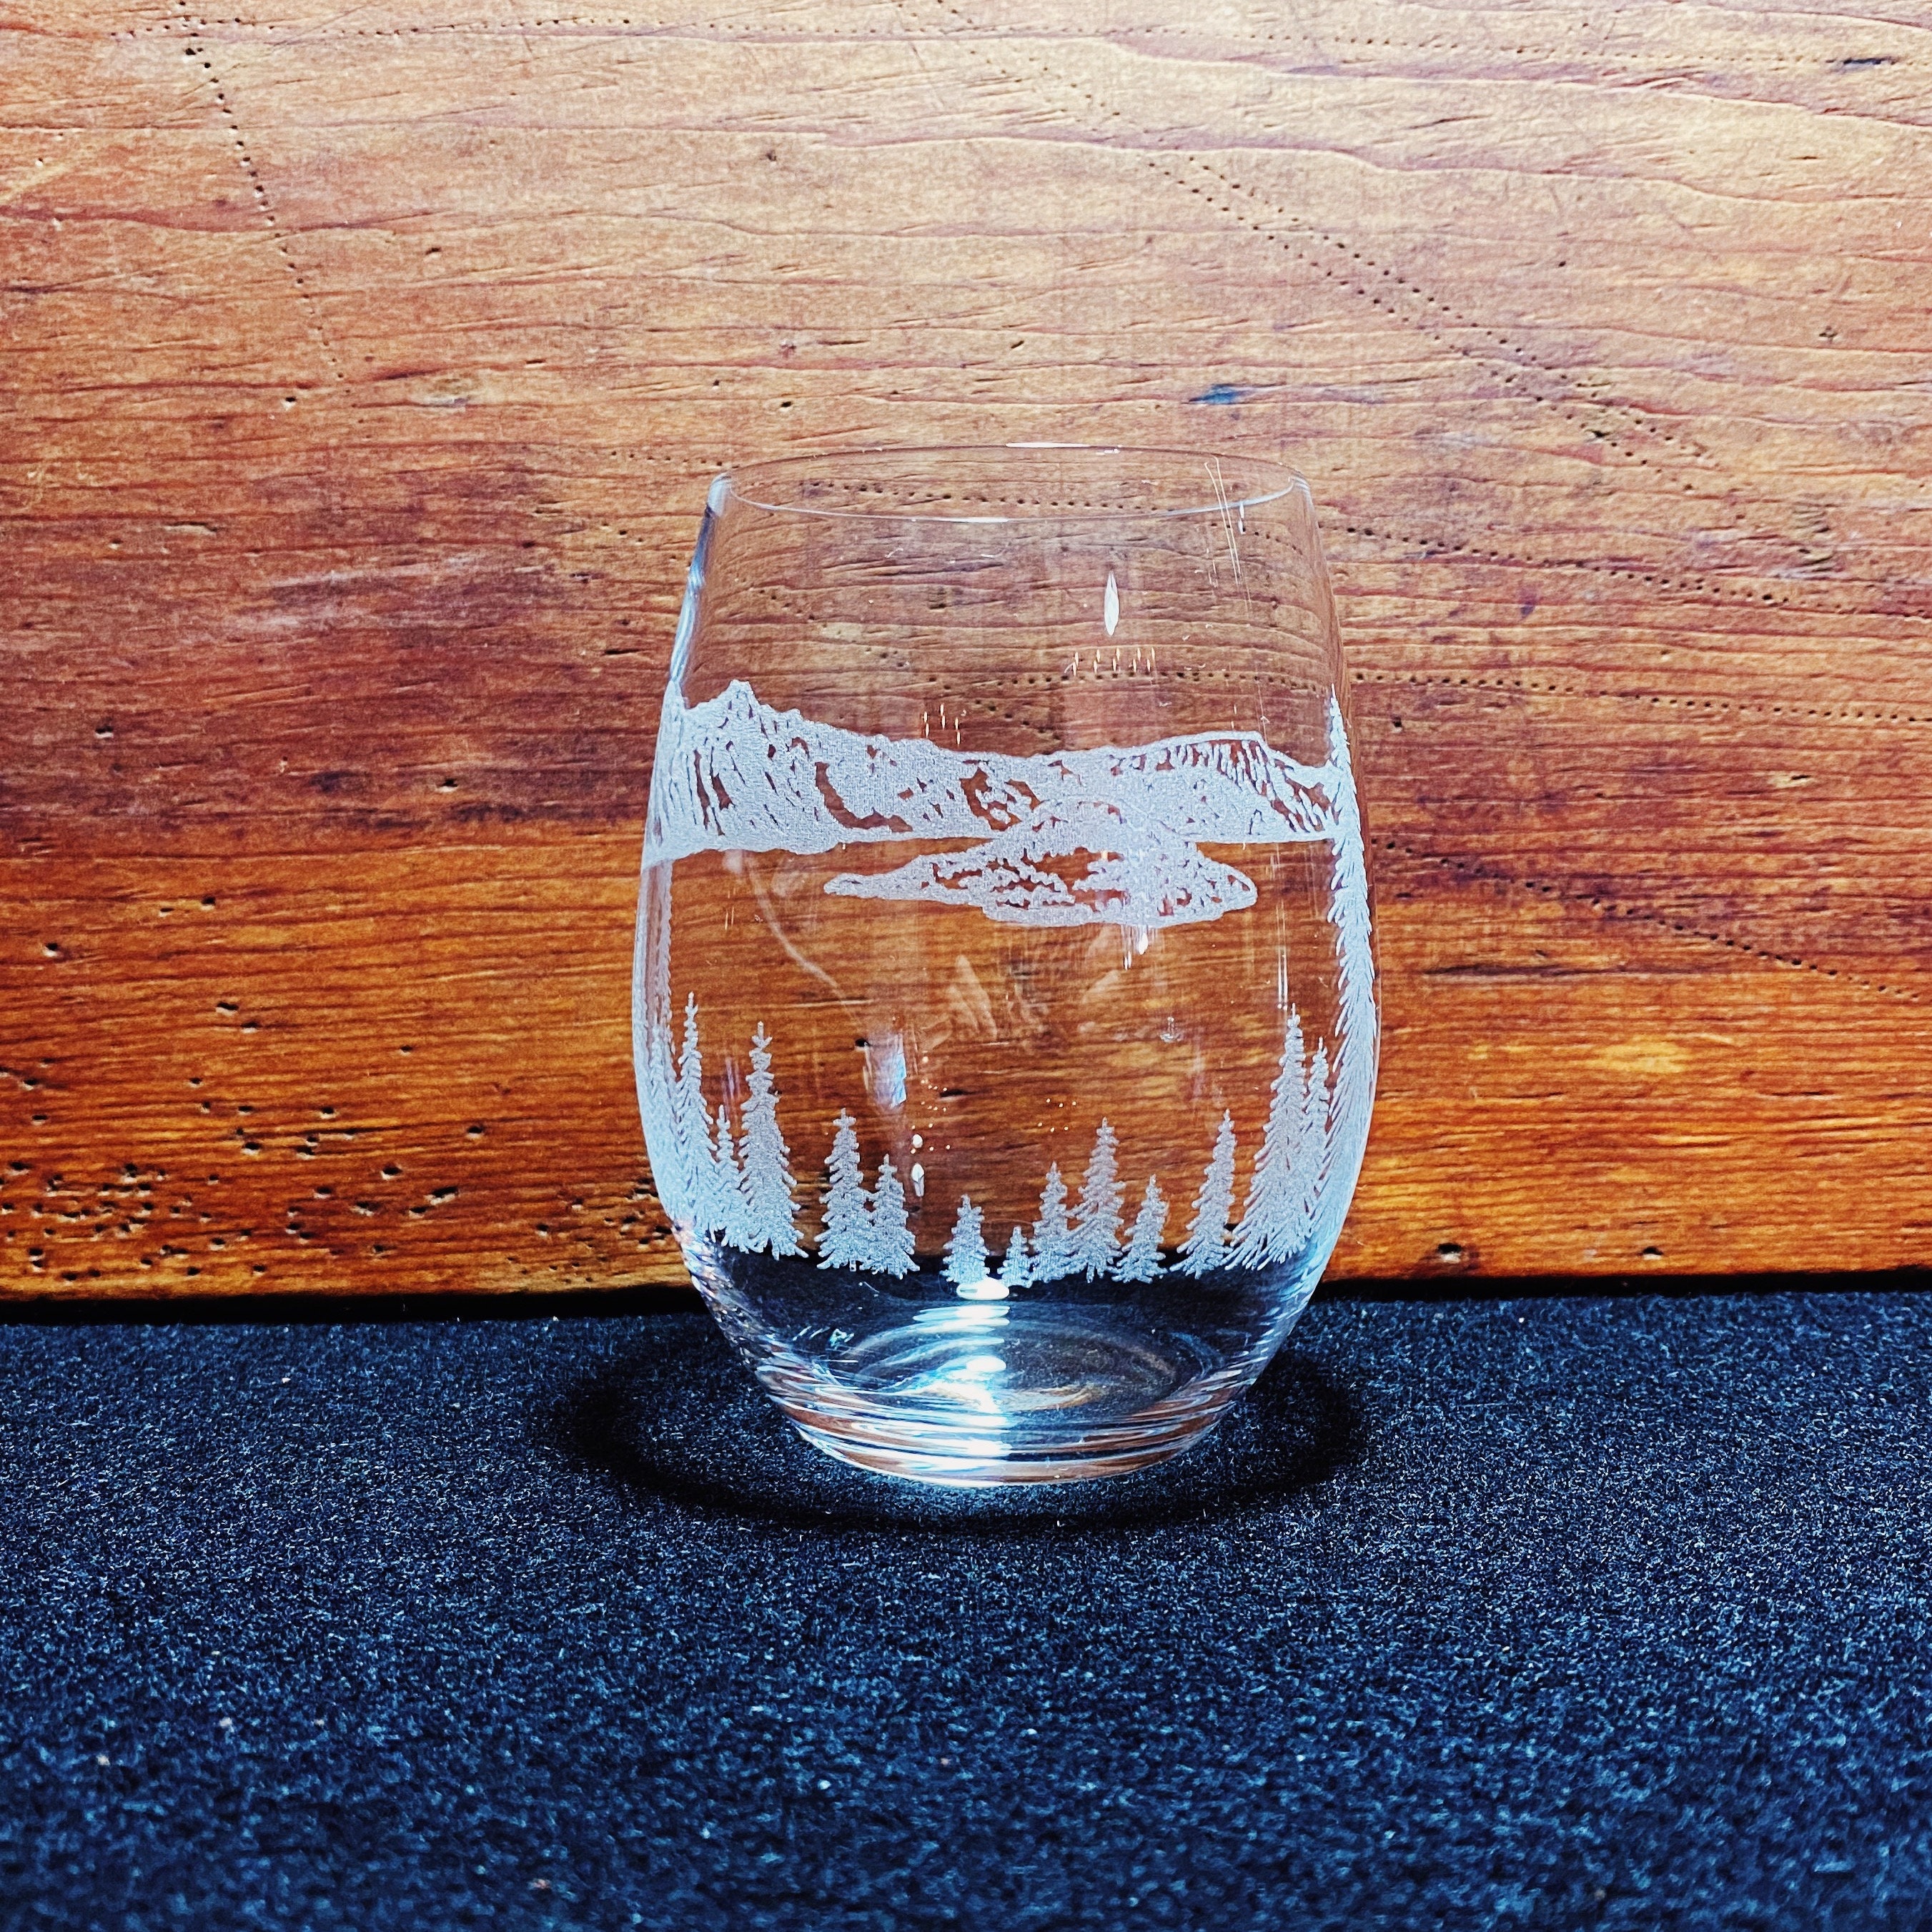 Mt. Shasta California Cascades Engraved Crystal Stemless Wine Glass 1  Single Wine Glass 